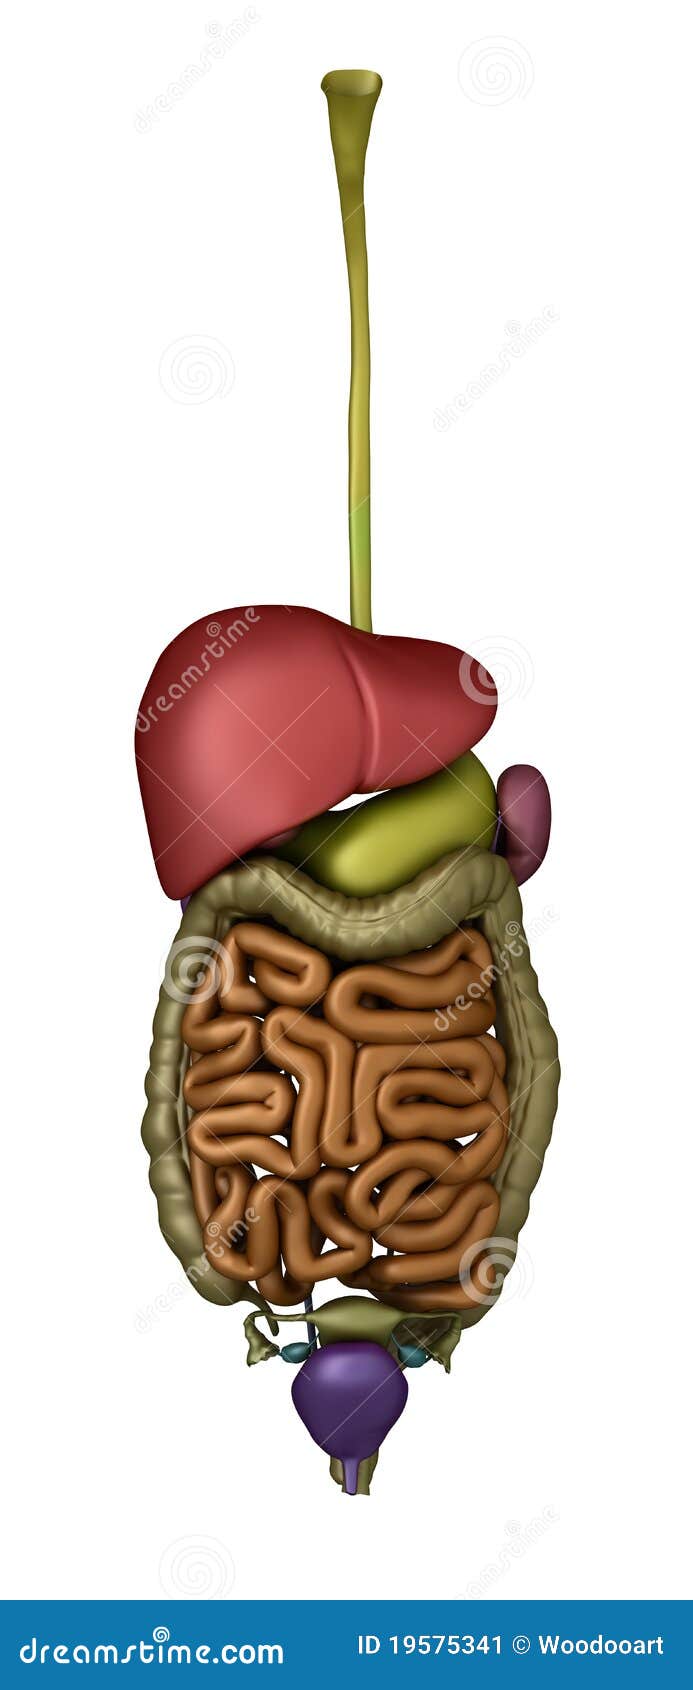 Female abdominal organs stock illustration. Illustration of